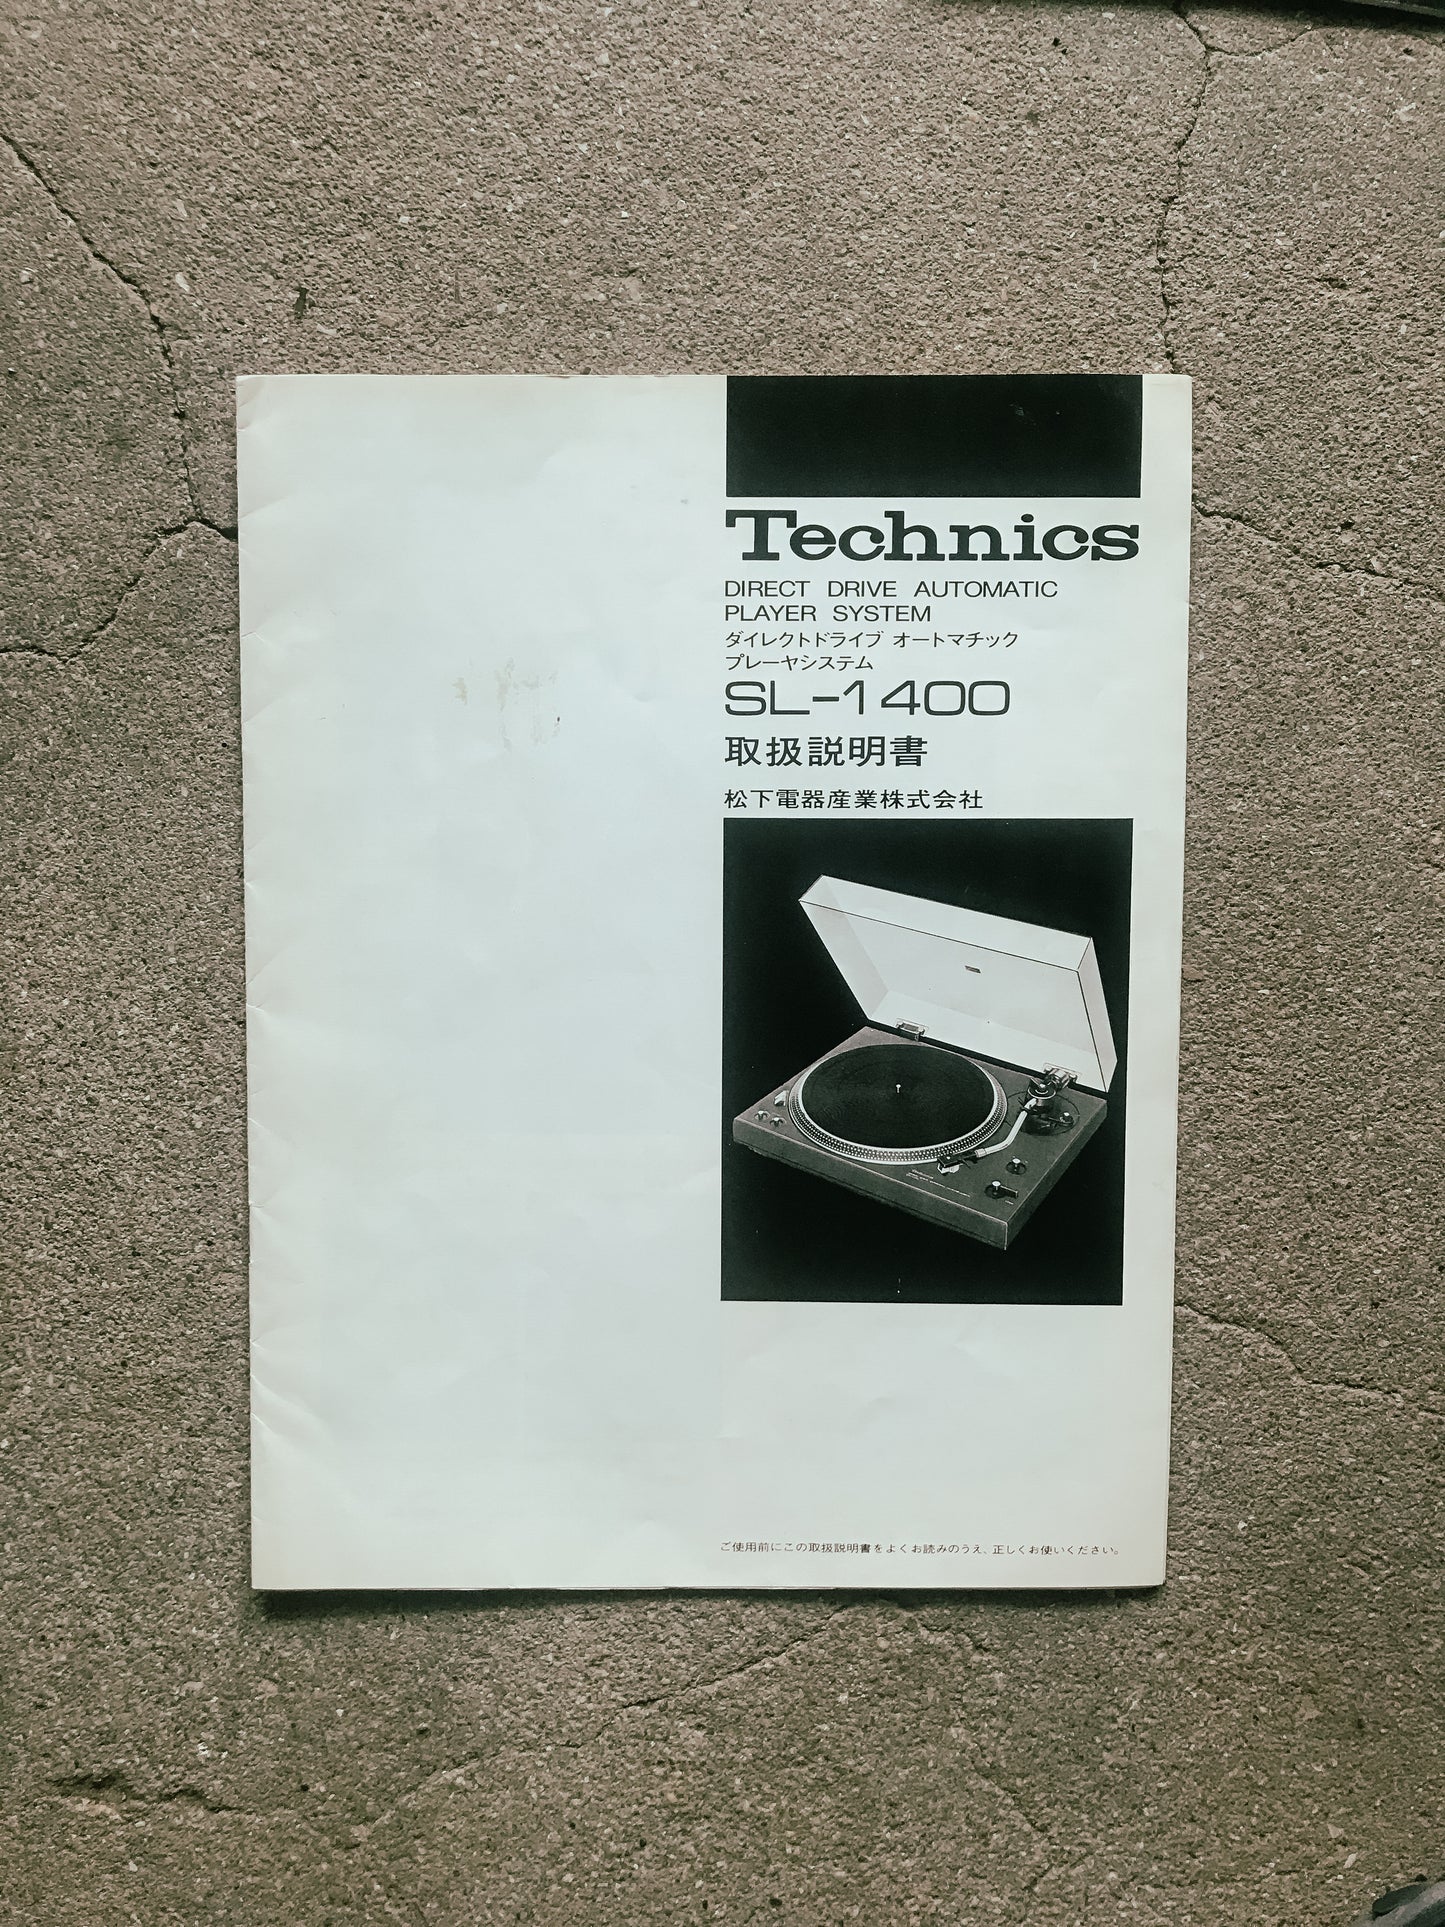 Technics SL-1400 Direct Drive Player